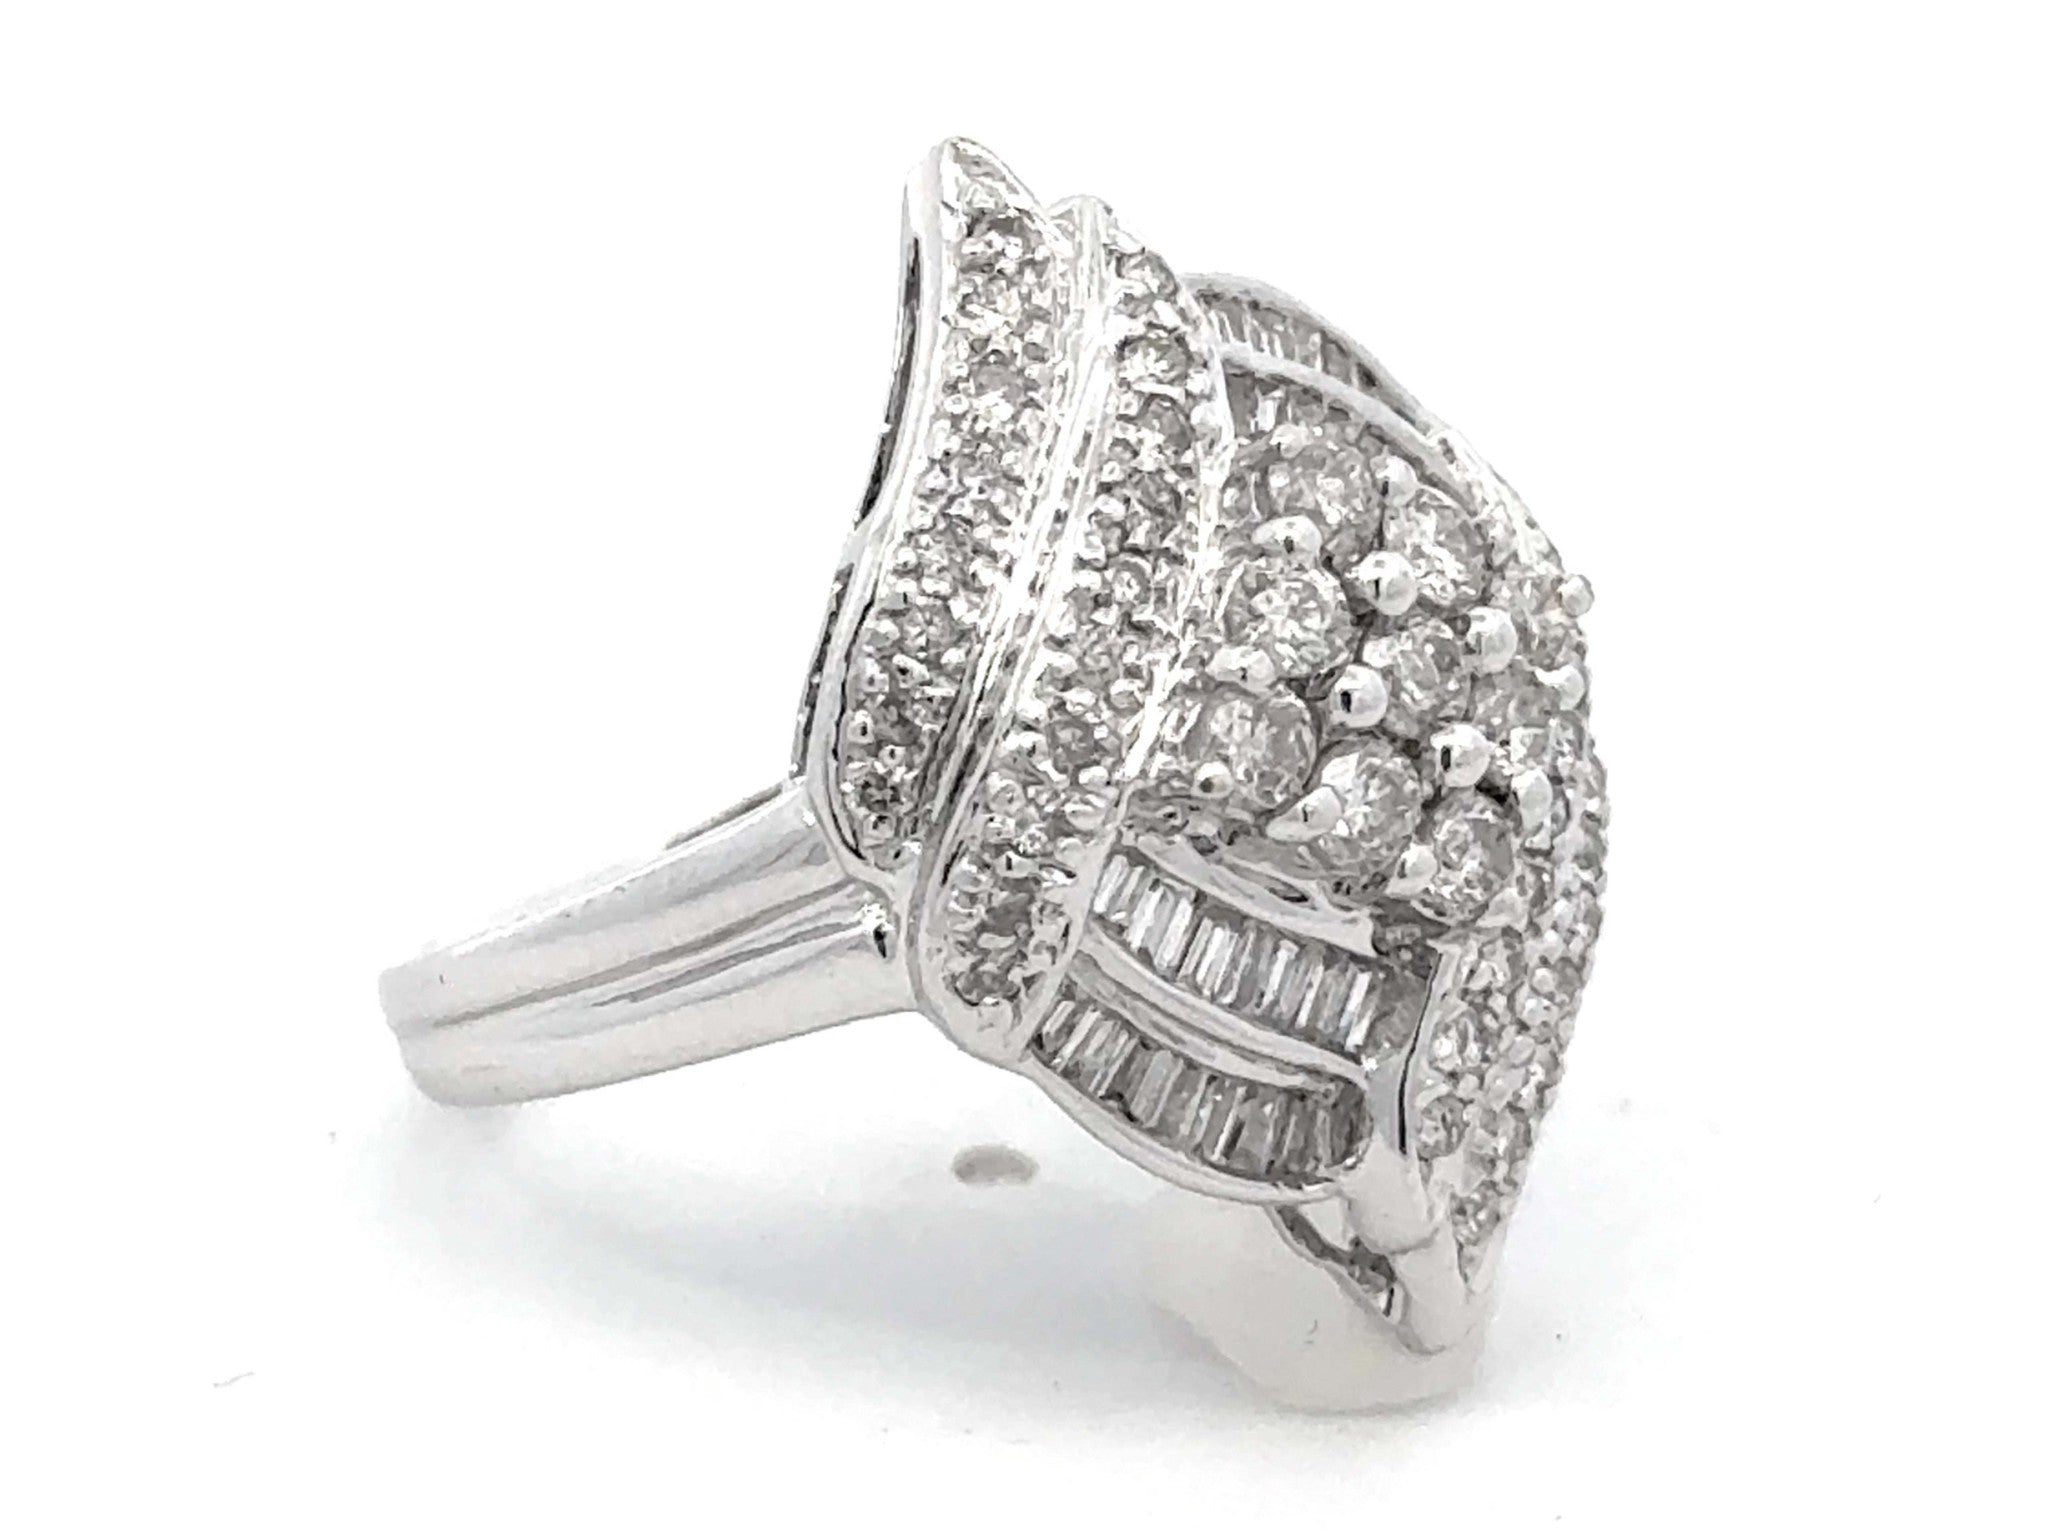 Brilliant and Baguette Diamond Ring 18k White Gold